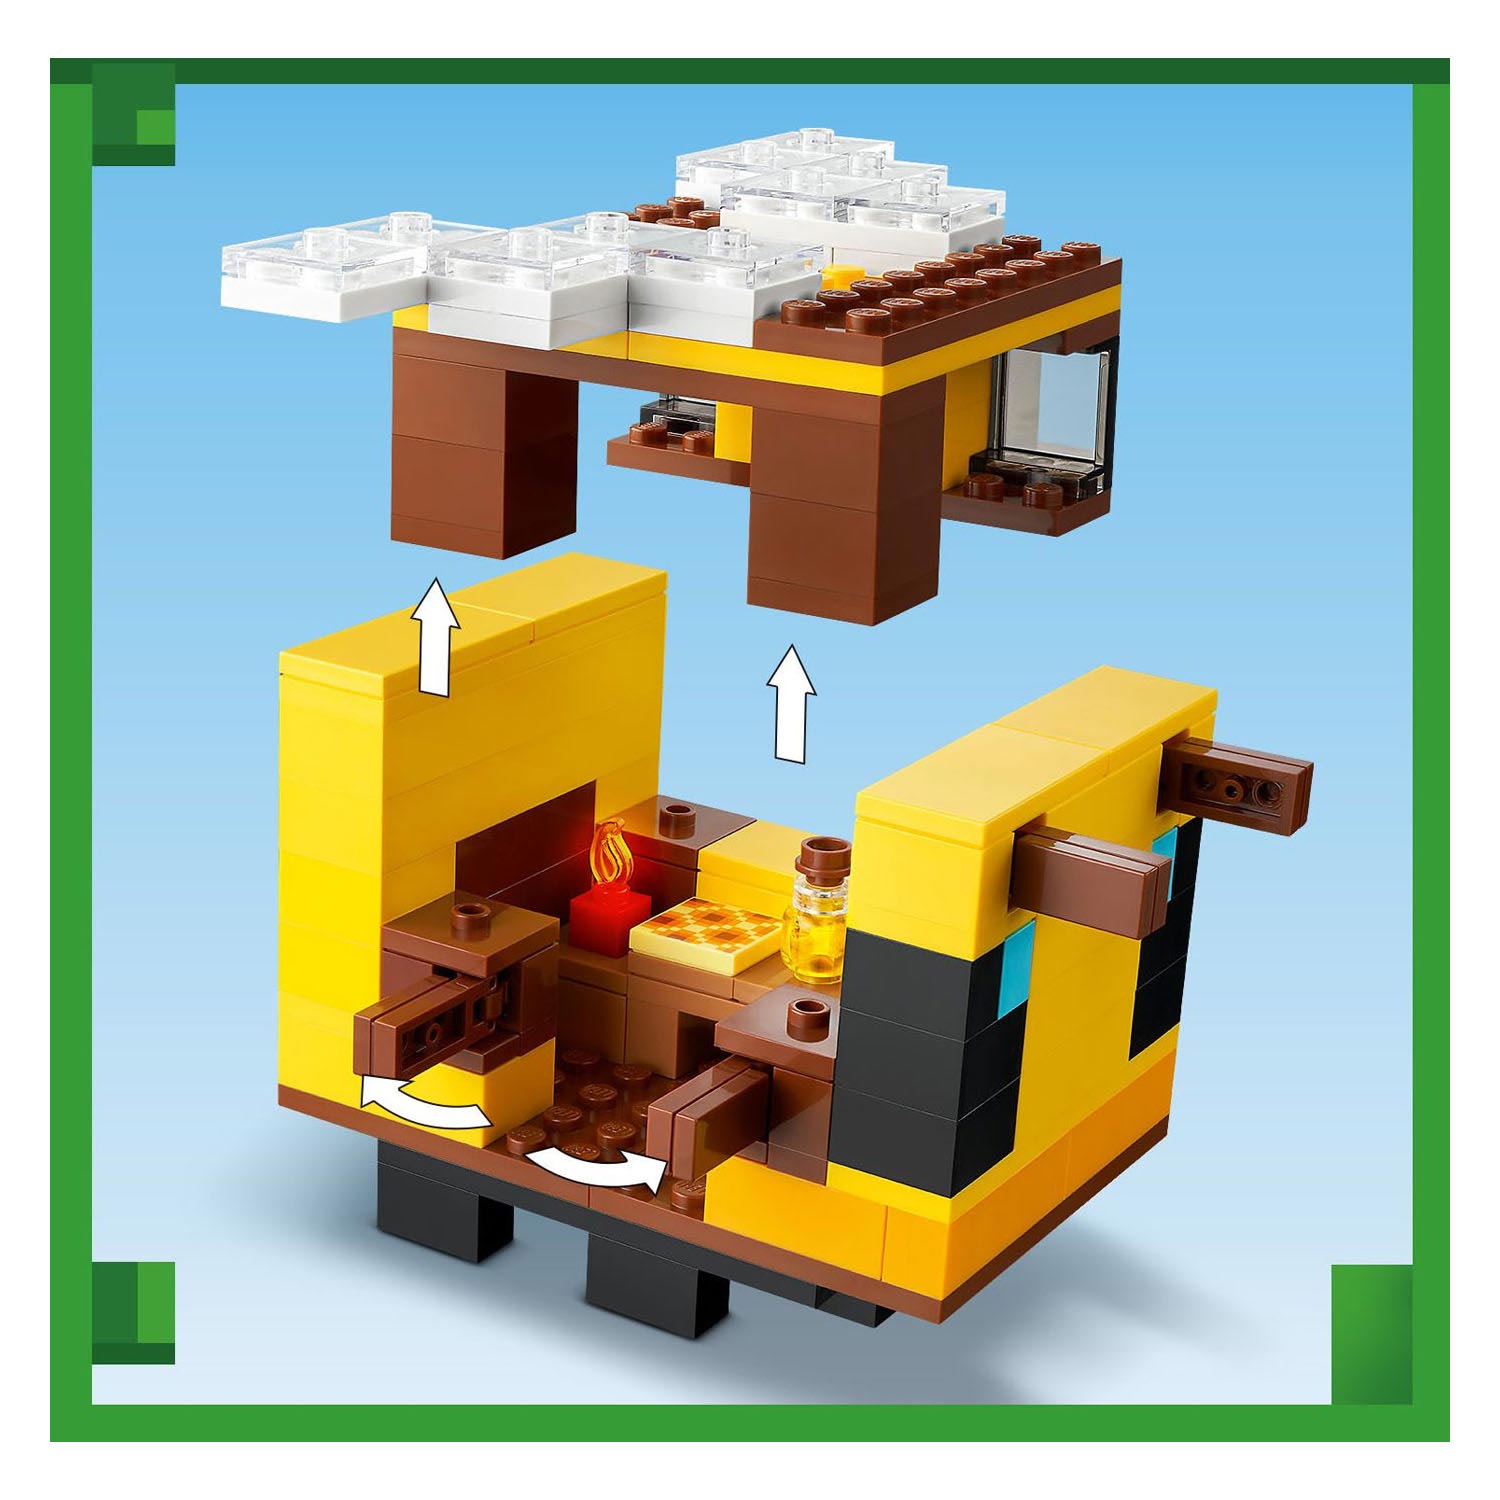 LEGO Minecraft Het Bijenhuisje 21241